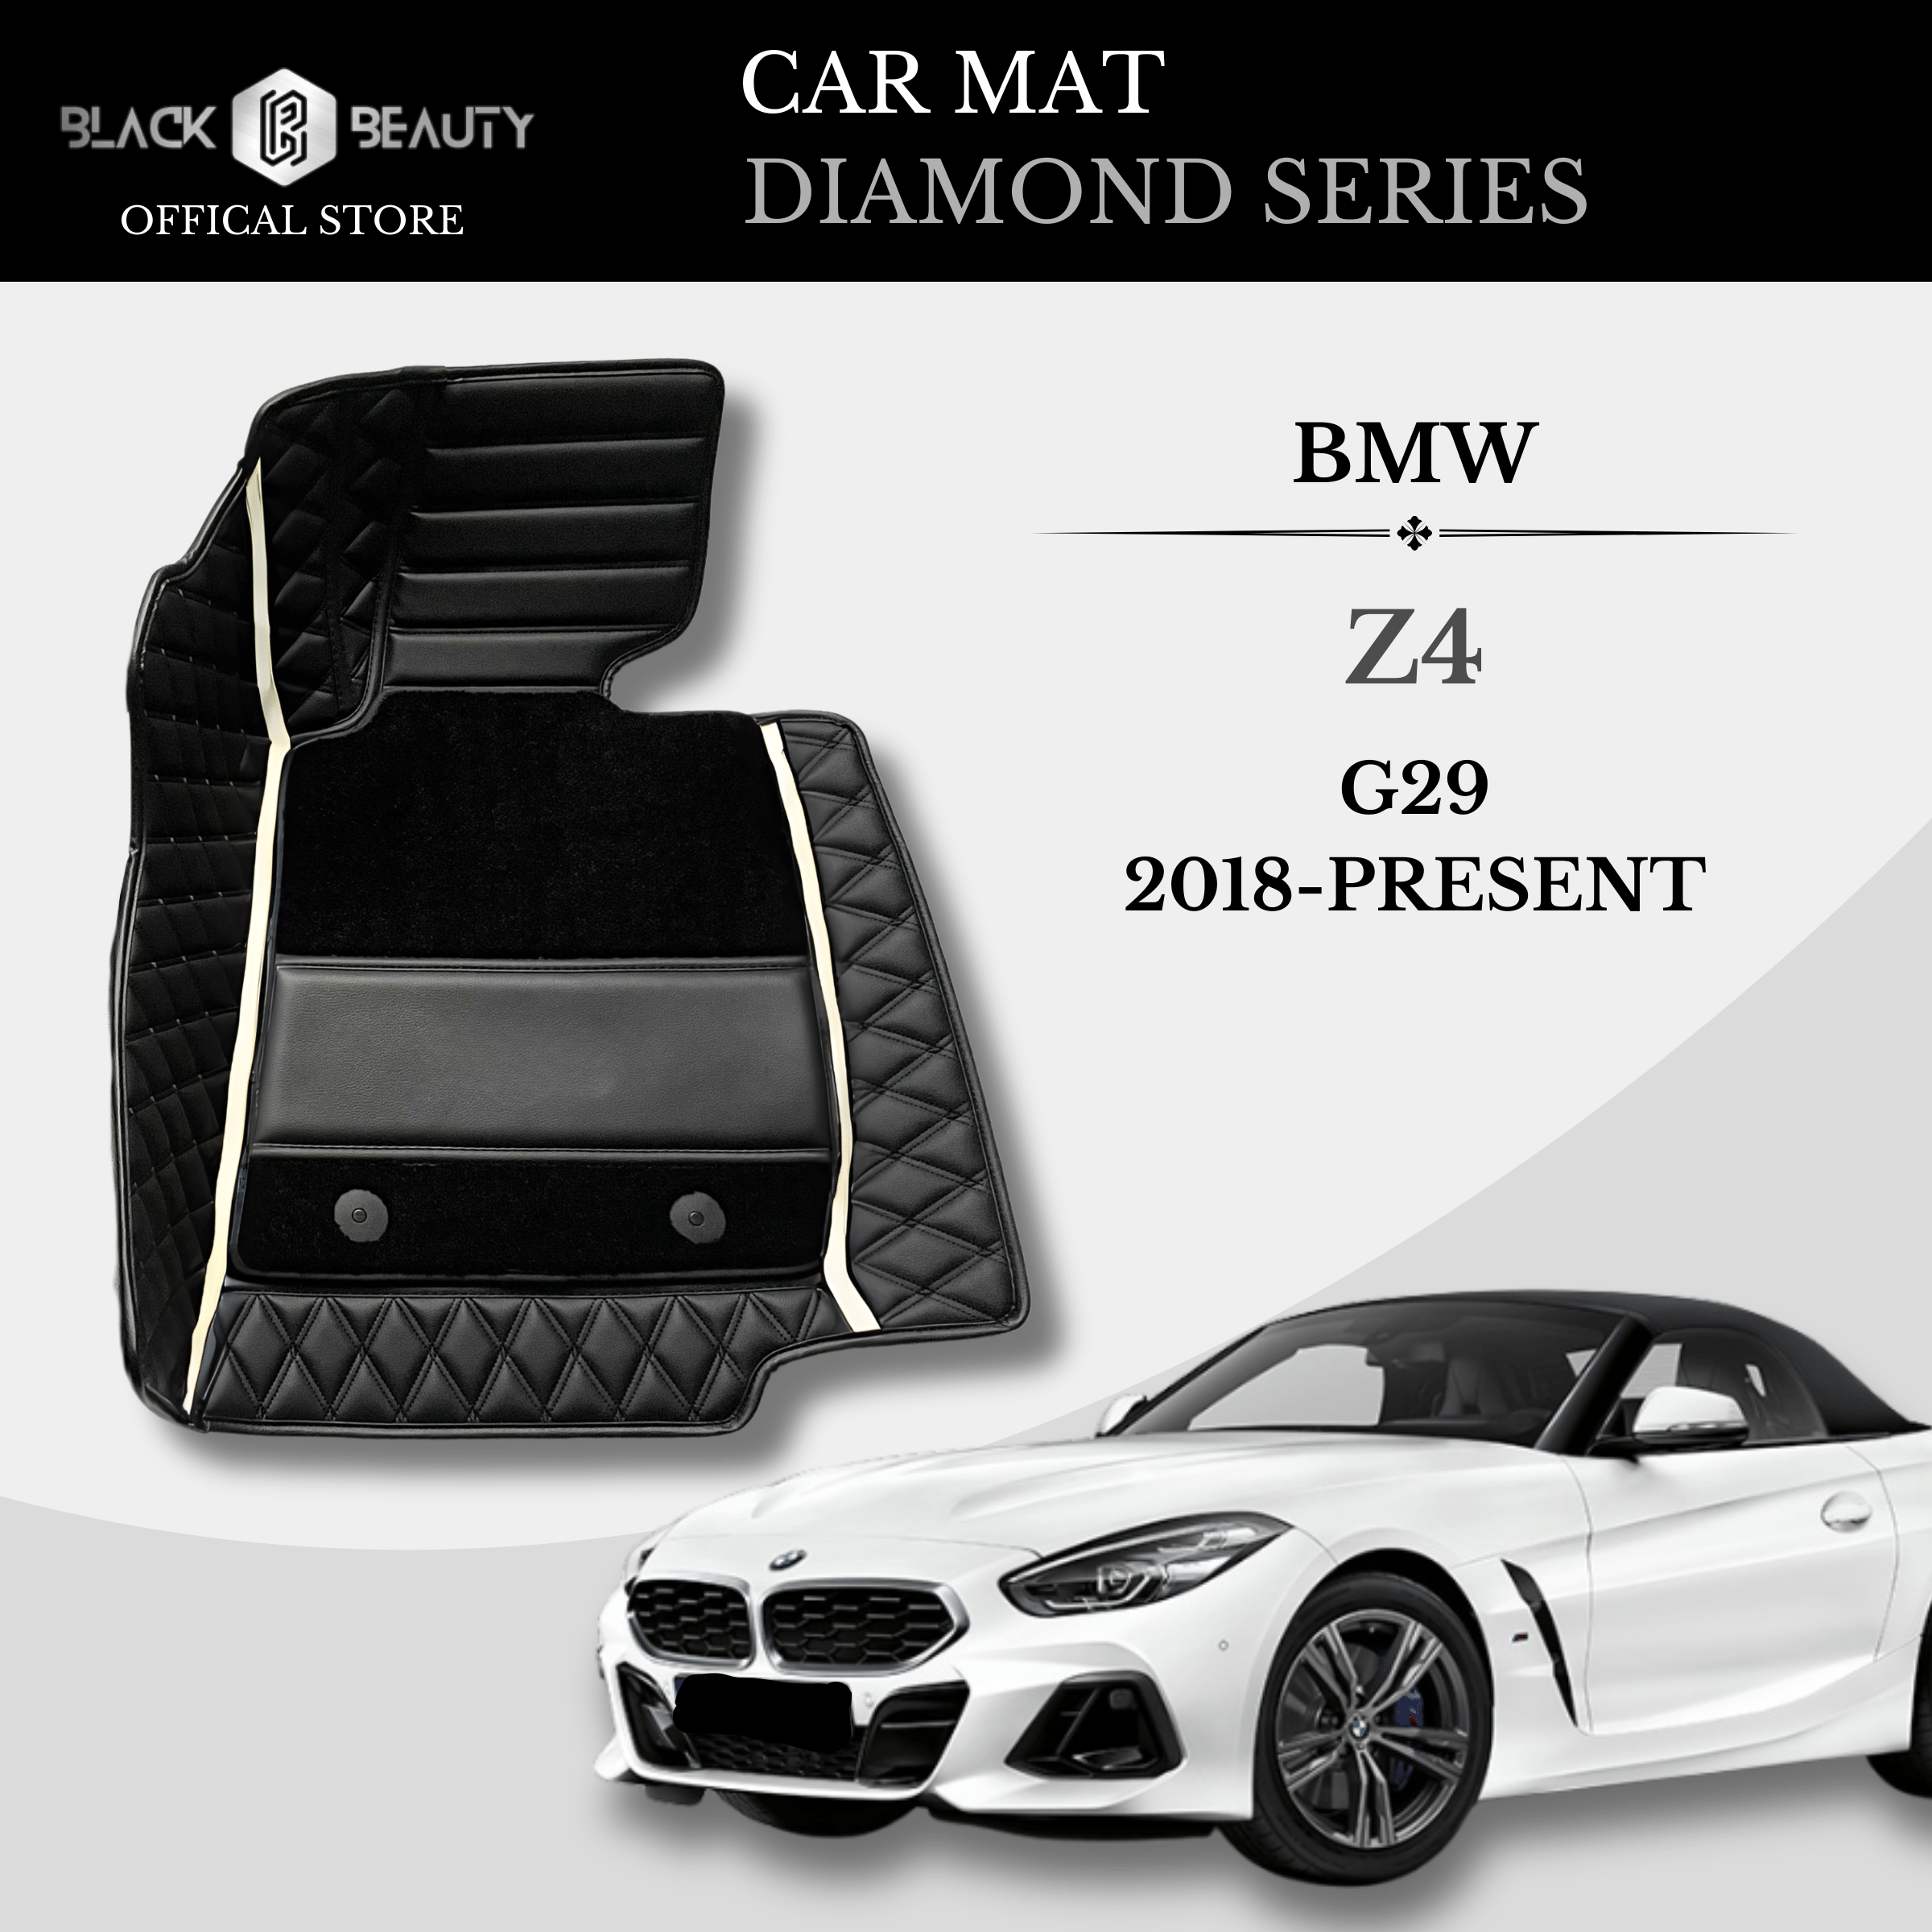 BMW Z4 G29 (2018-Present) - Diamond Series Car Mat